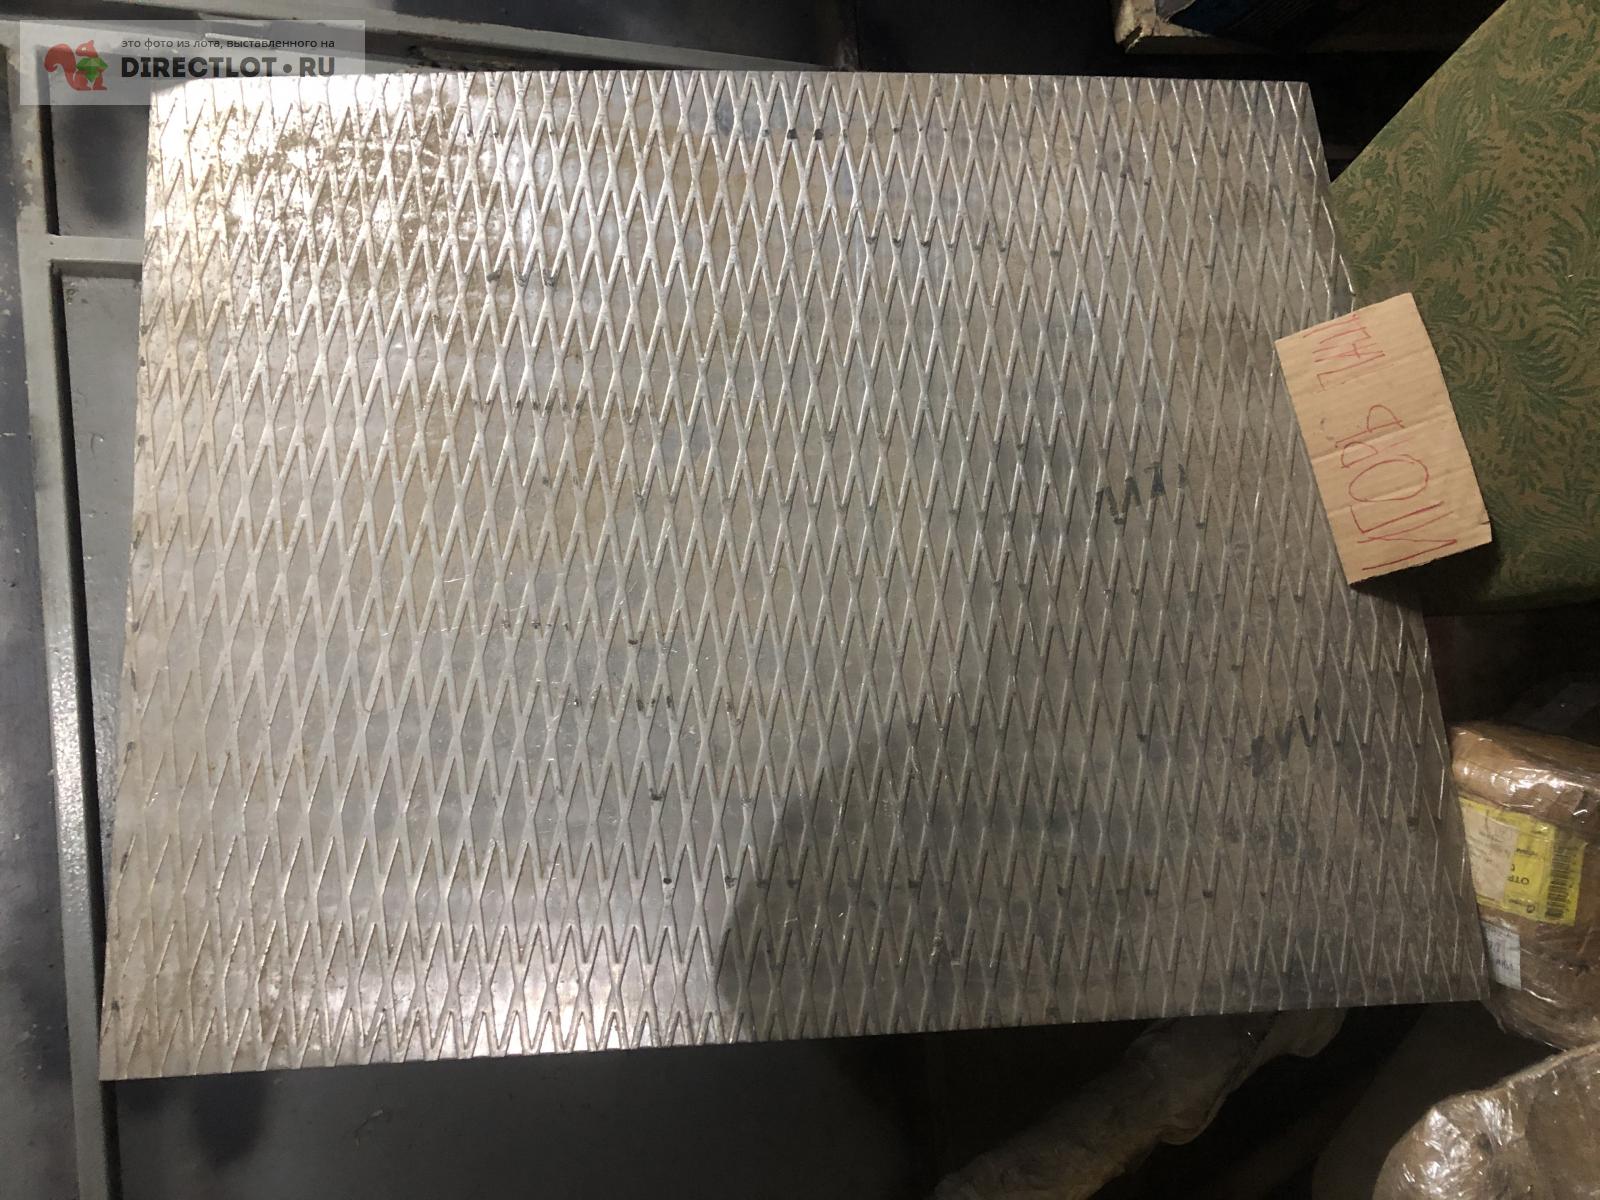 Алюминий лист рефленка (квинтет) 755/985 S 4 вес 7 кг  в Керчи .